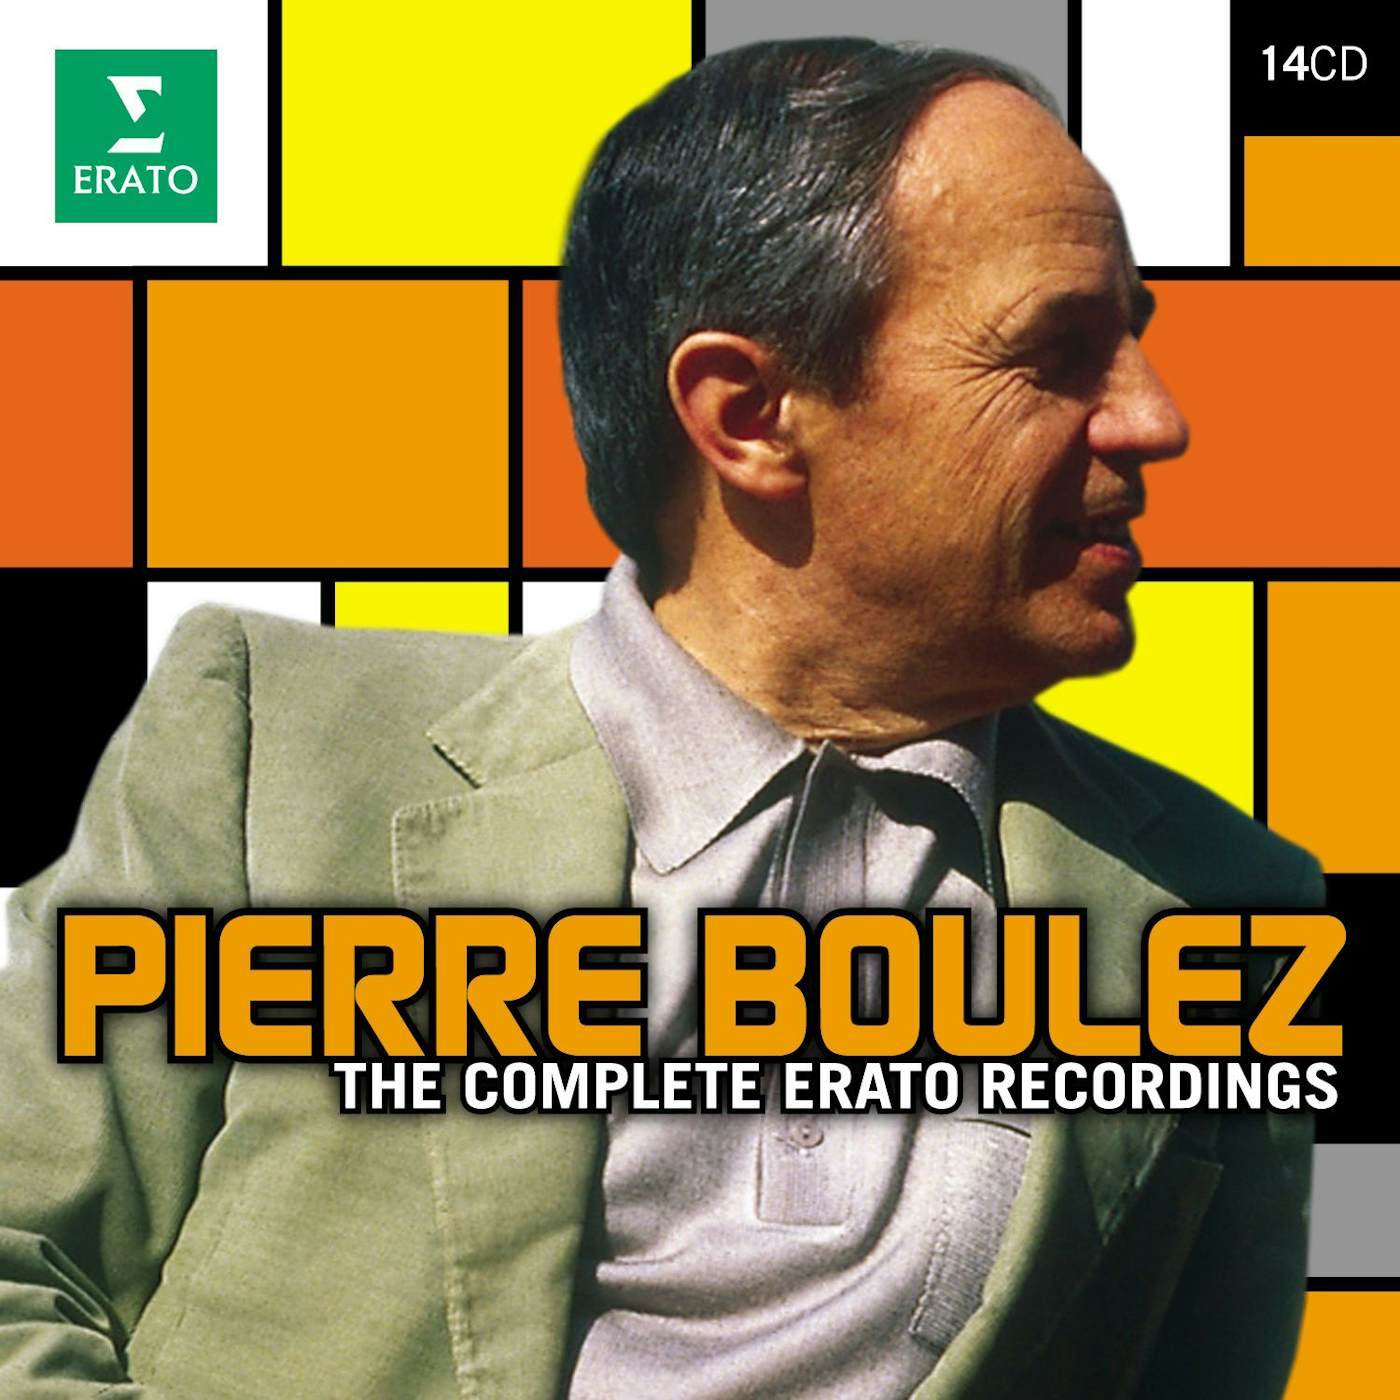 Pierre Boulez COMPLETE ERATO RECORDINGS CD